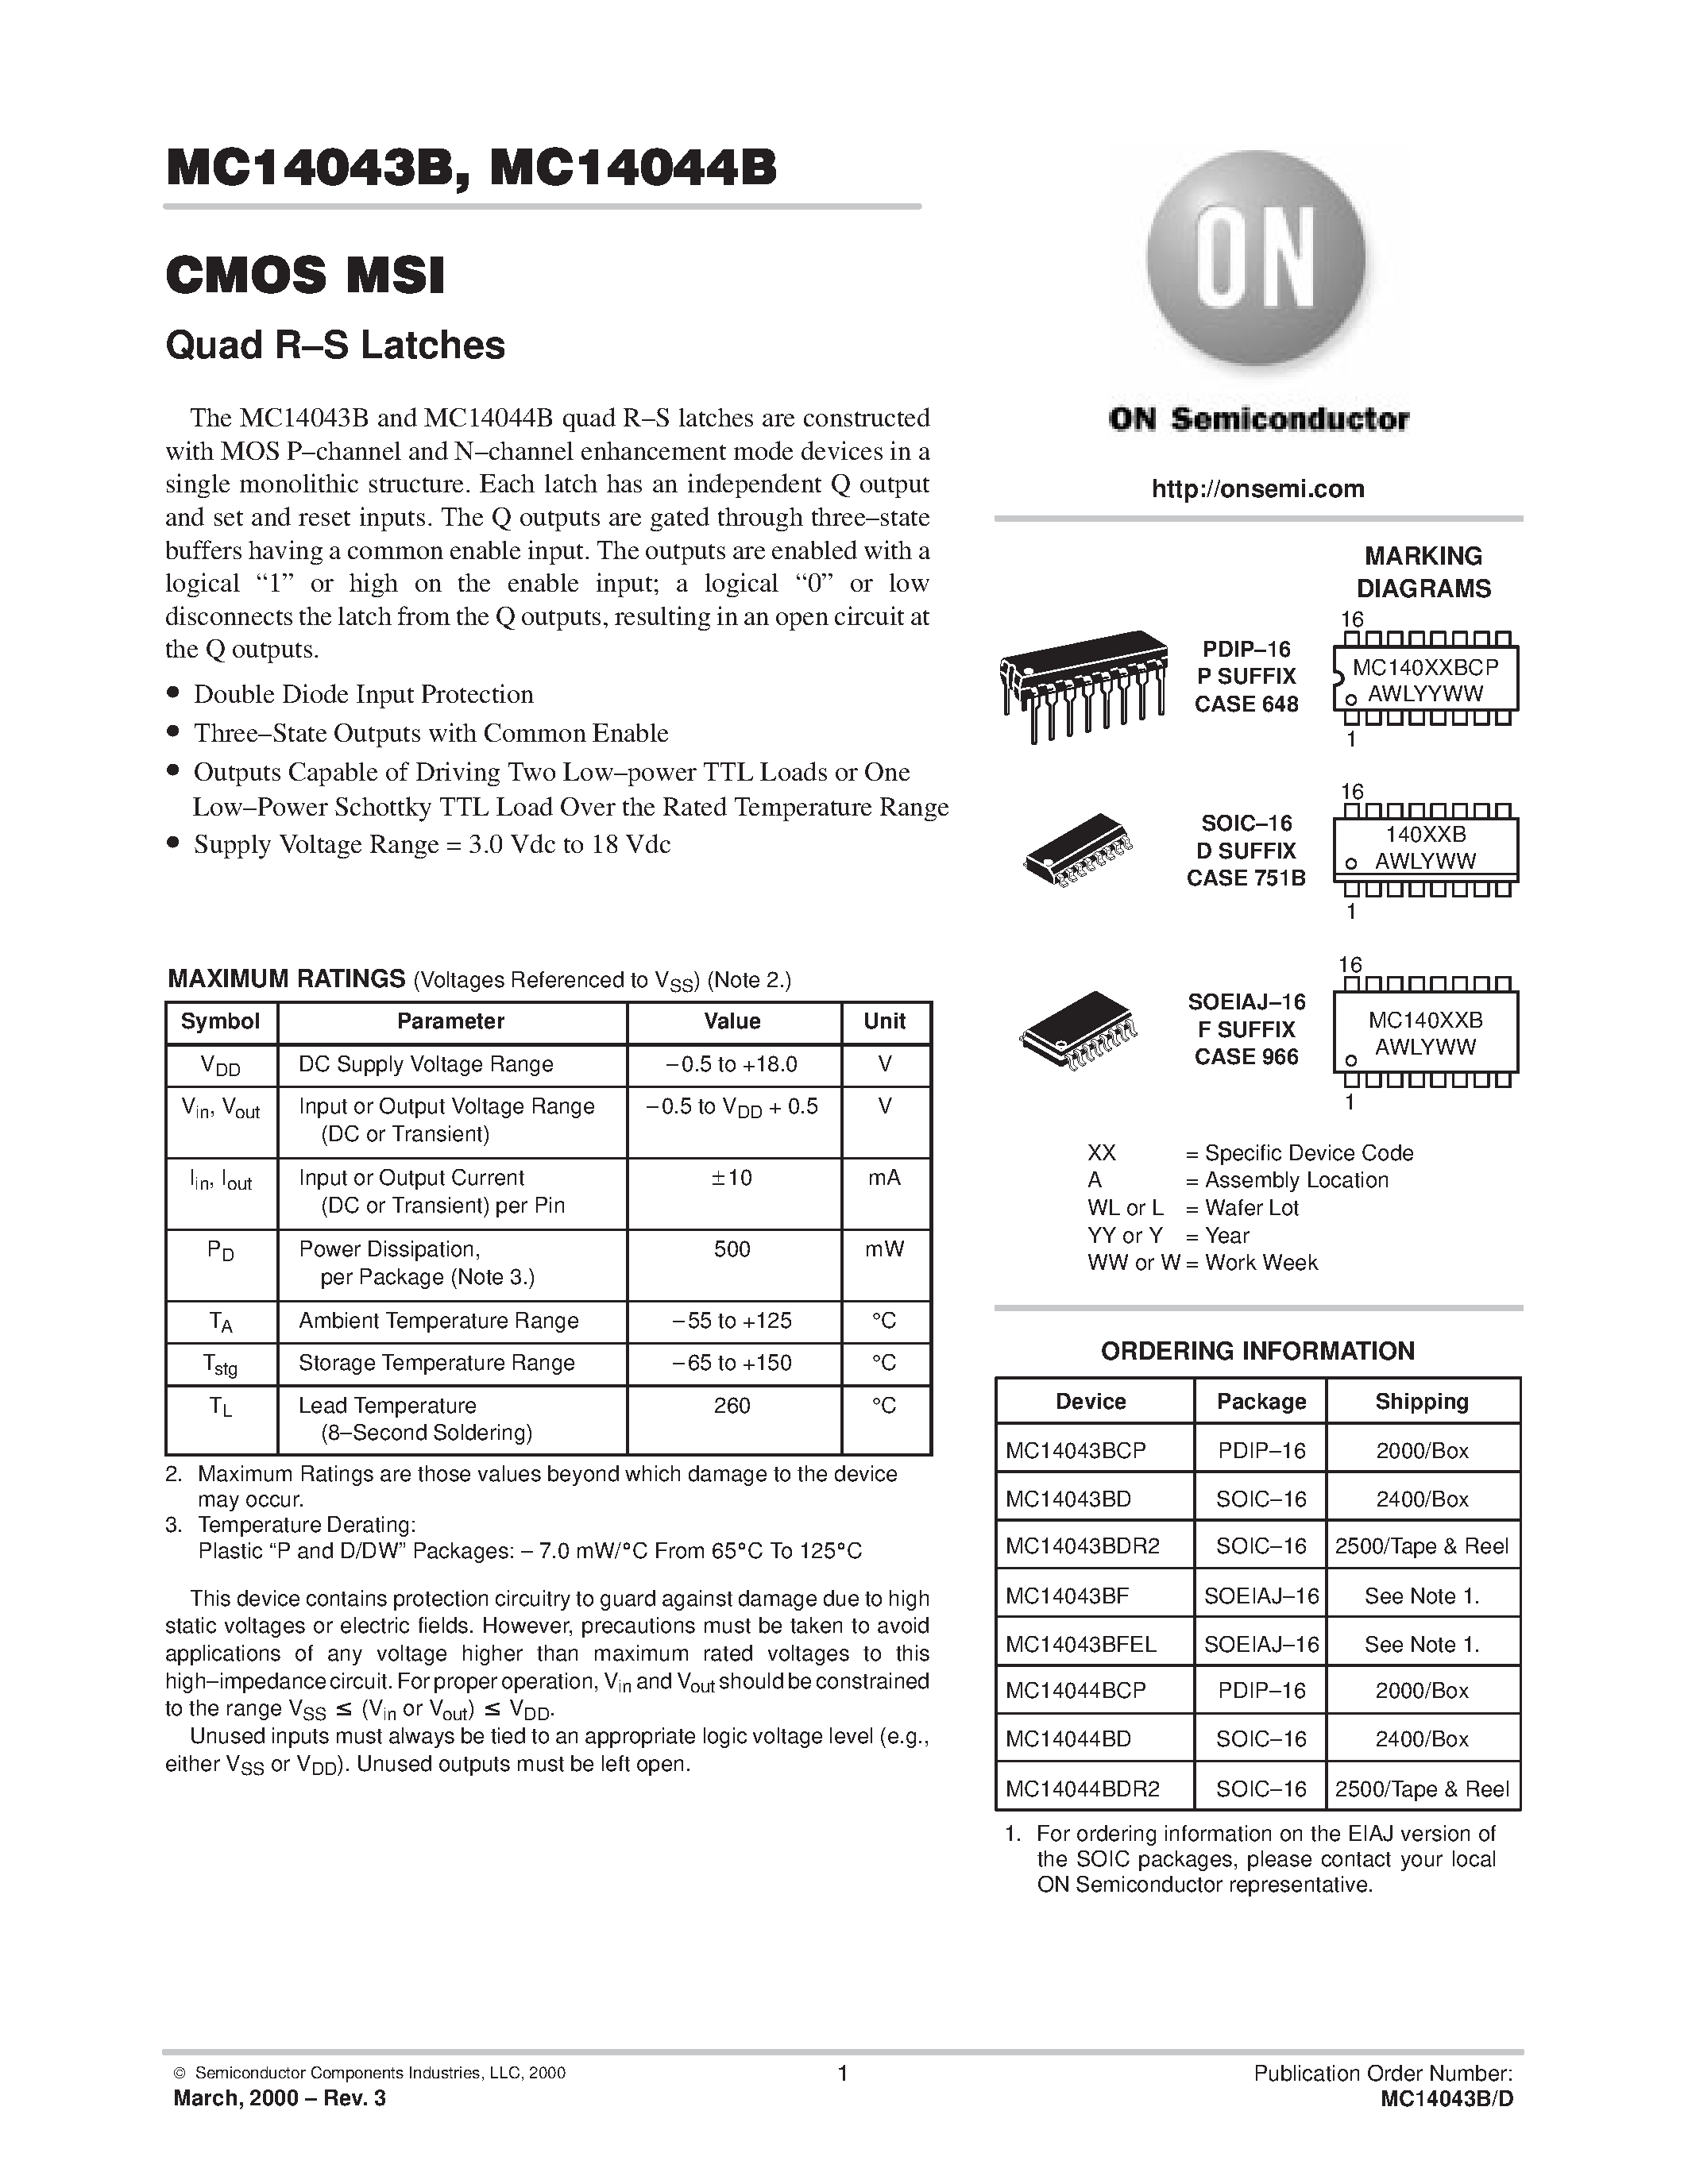 Даташит MC14043BFEL - CMOS MSI(Quad R-S Latches) страница 1